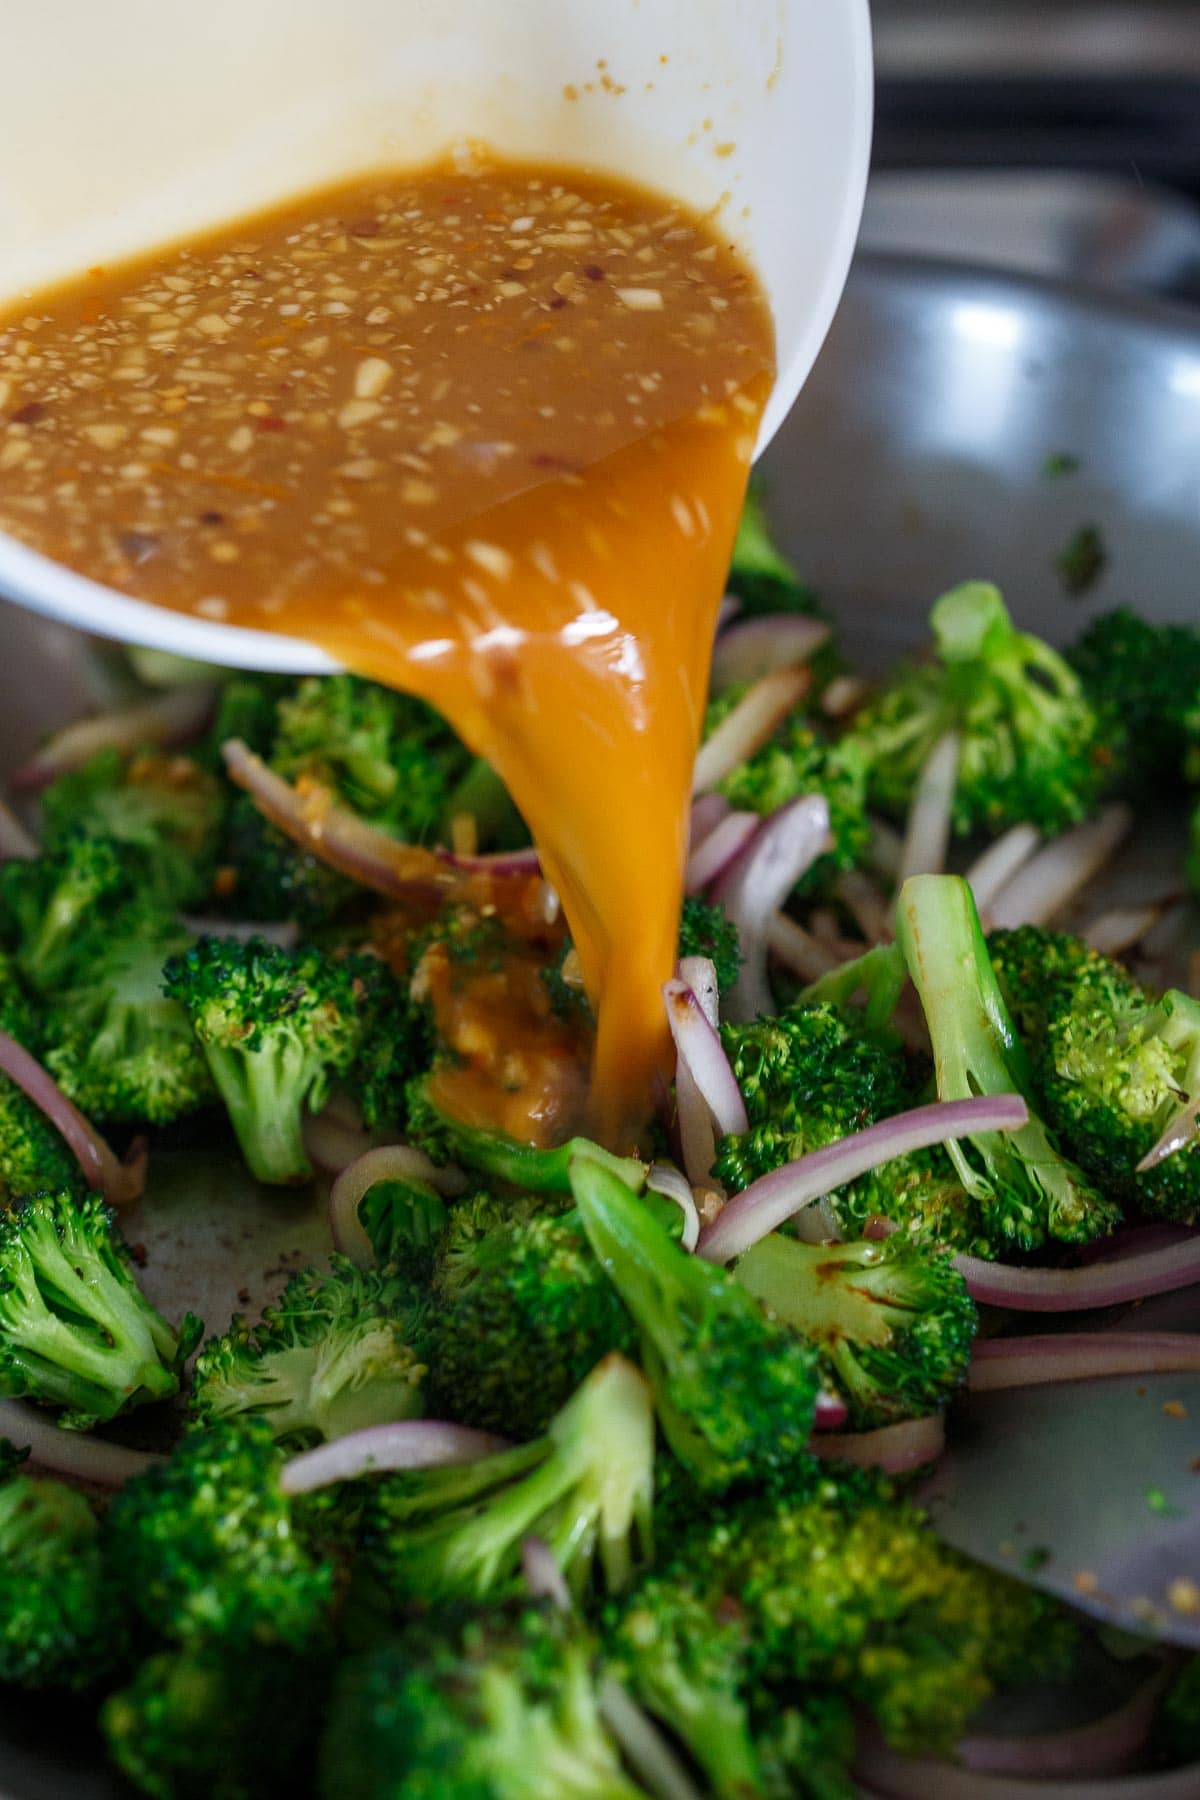 Pouring sauce into broccoli.